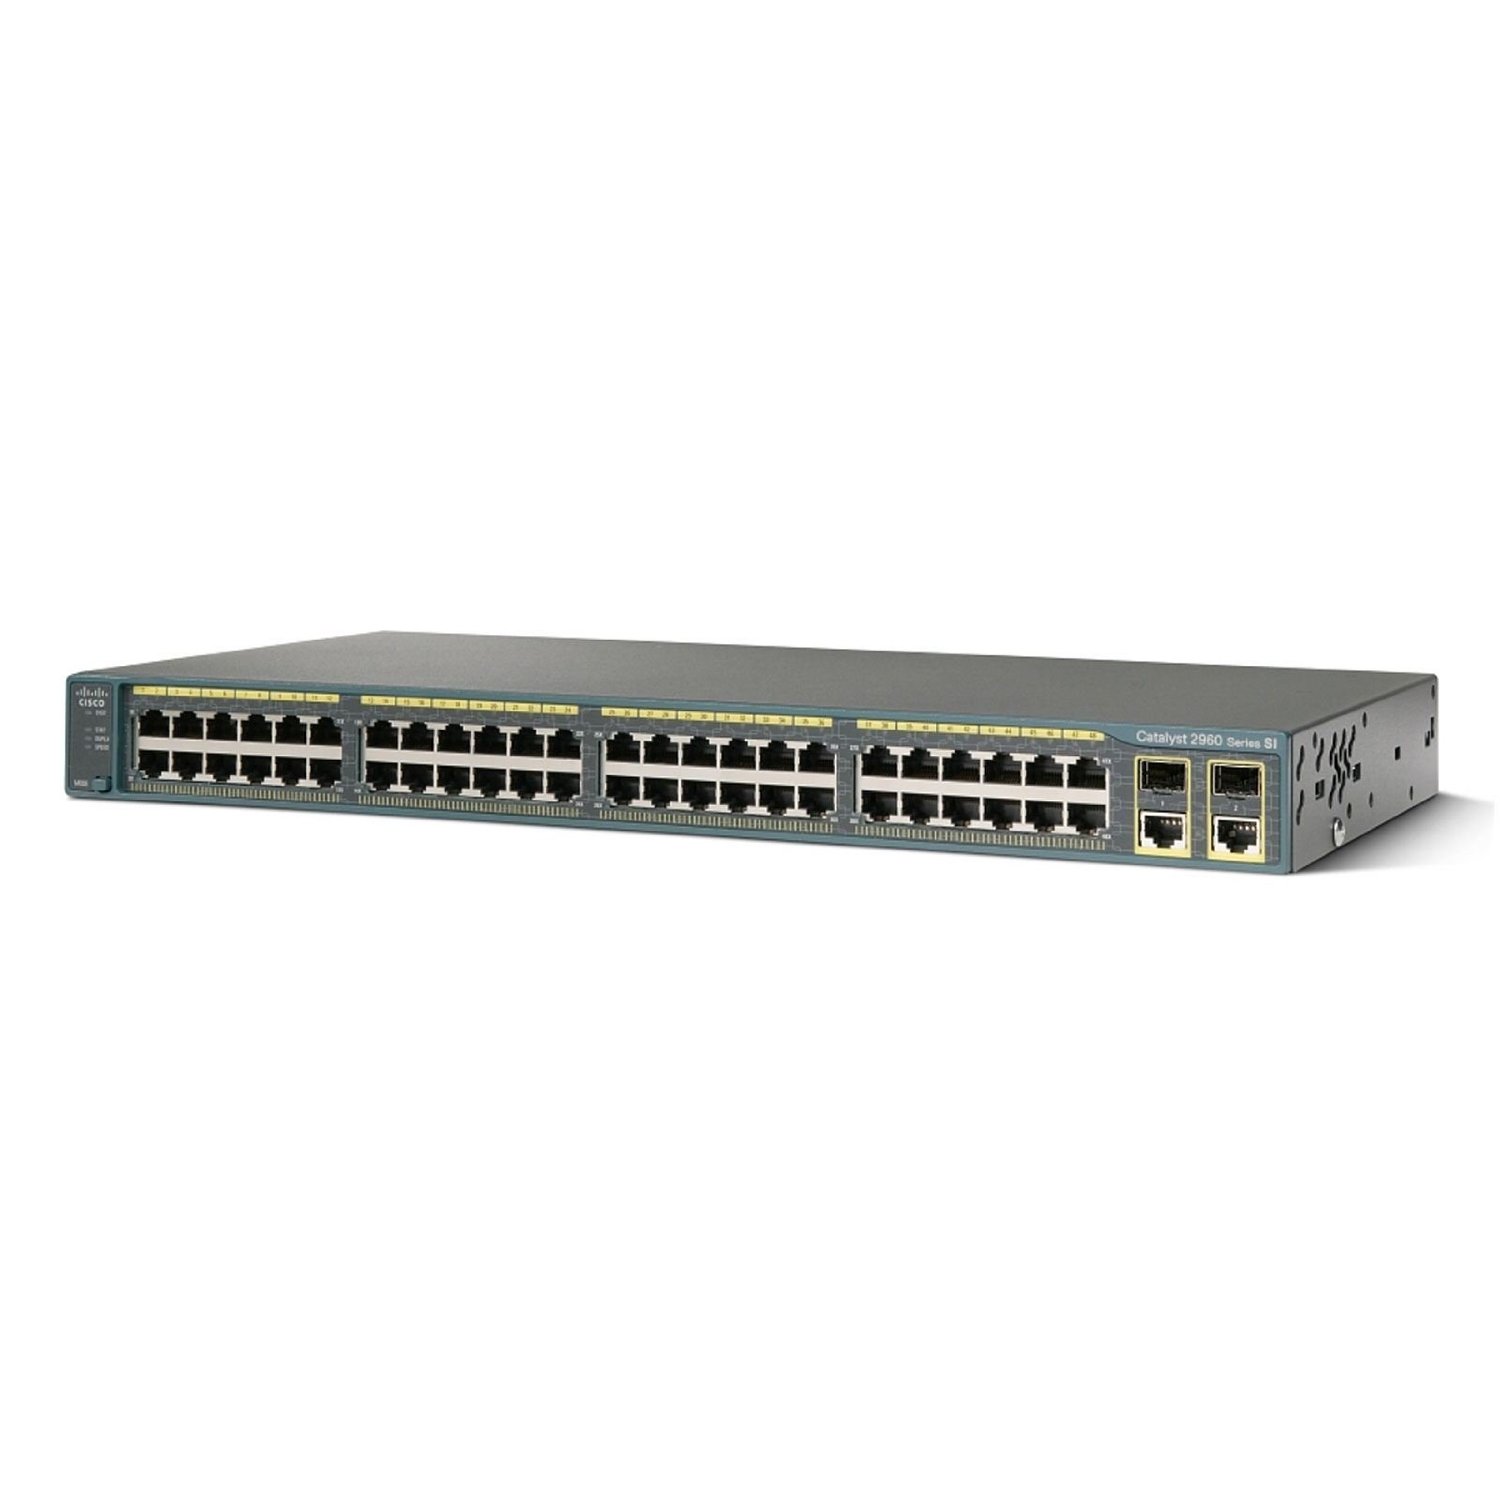 Thiết bị chia mạng Cisco WS-C2960-48TC-L (48 Ethernet 10/ 100 ports + 2 dual-purpose Ports (10/ 100/ 1000 or SFP) LAN Base software)